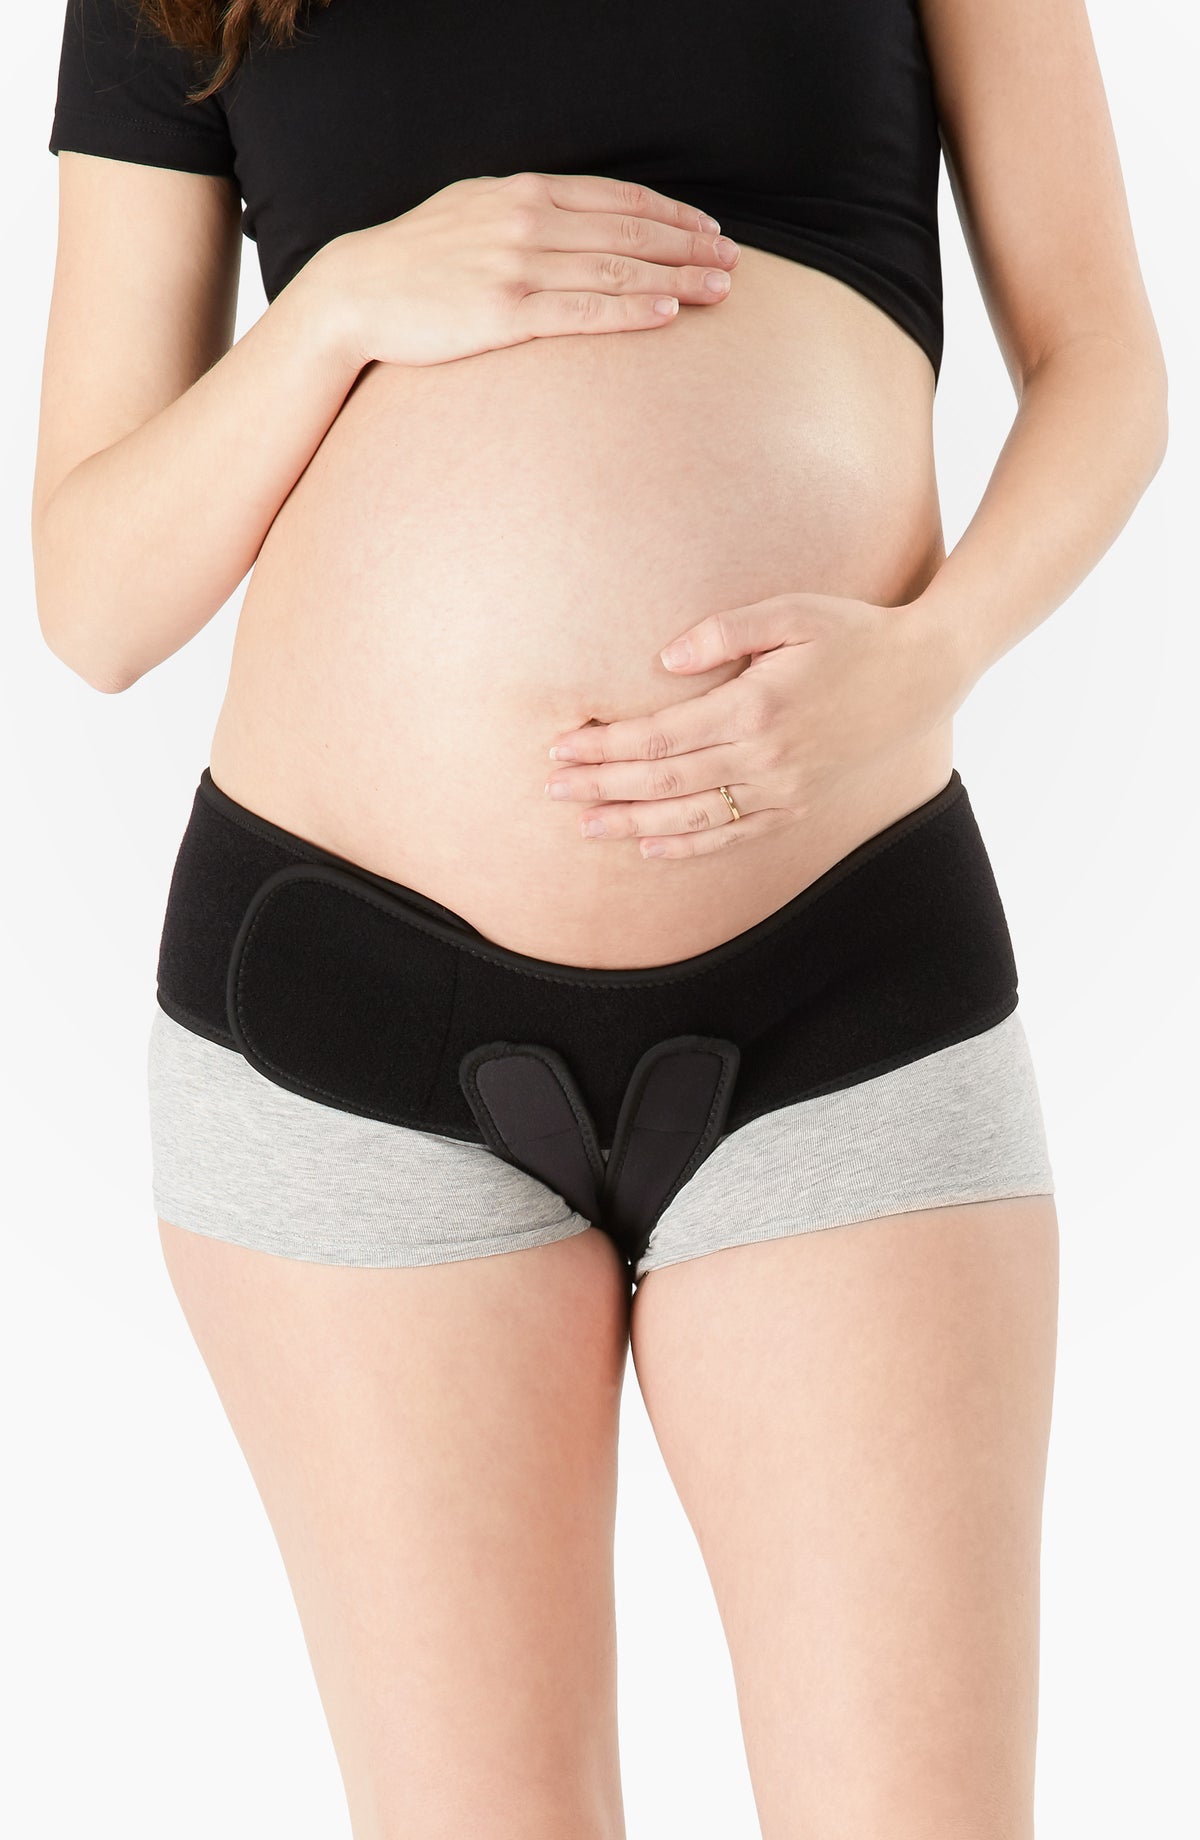 Pelvic Support Belt Uterus Support Belt Women's Brace for Treating Dropped  Bladder, Uterine Prolapse, Vulvar Varicosities, Postpartum and Symphysis